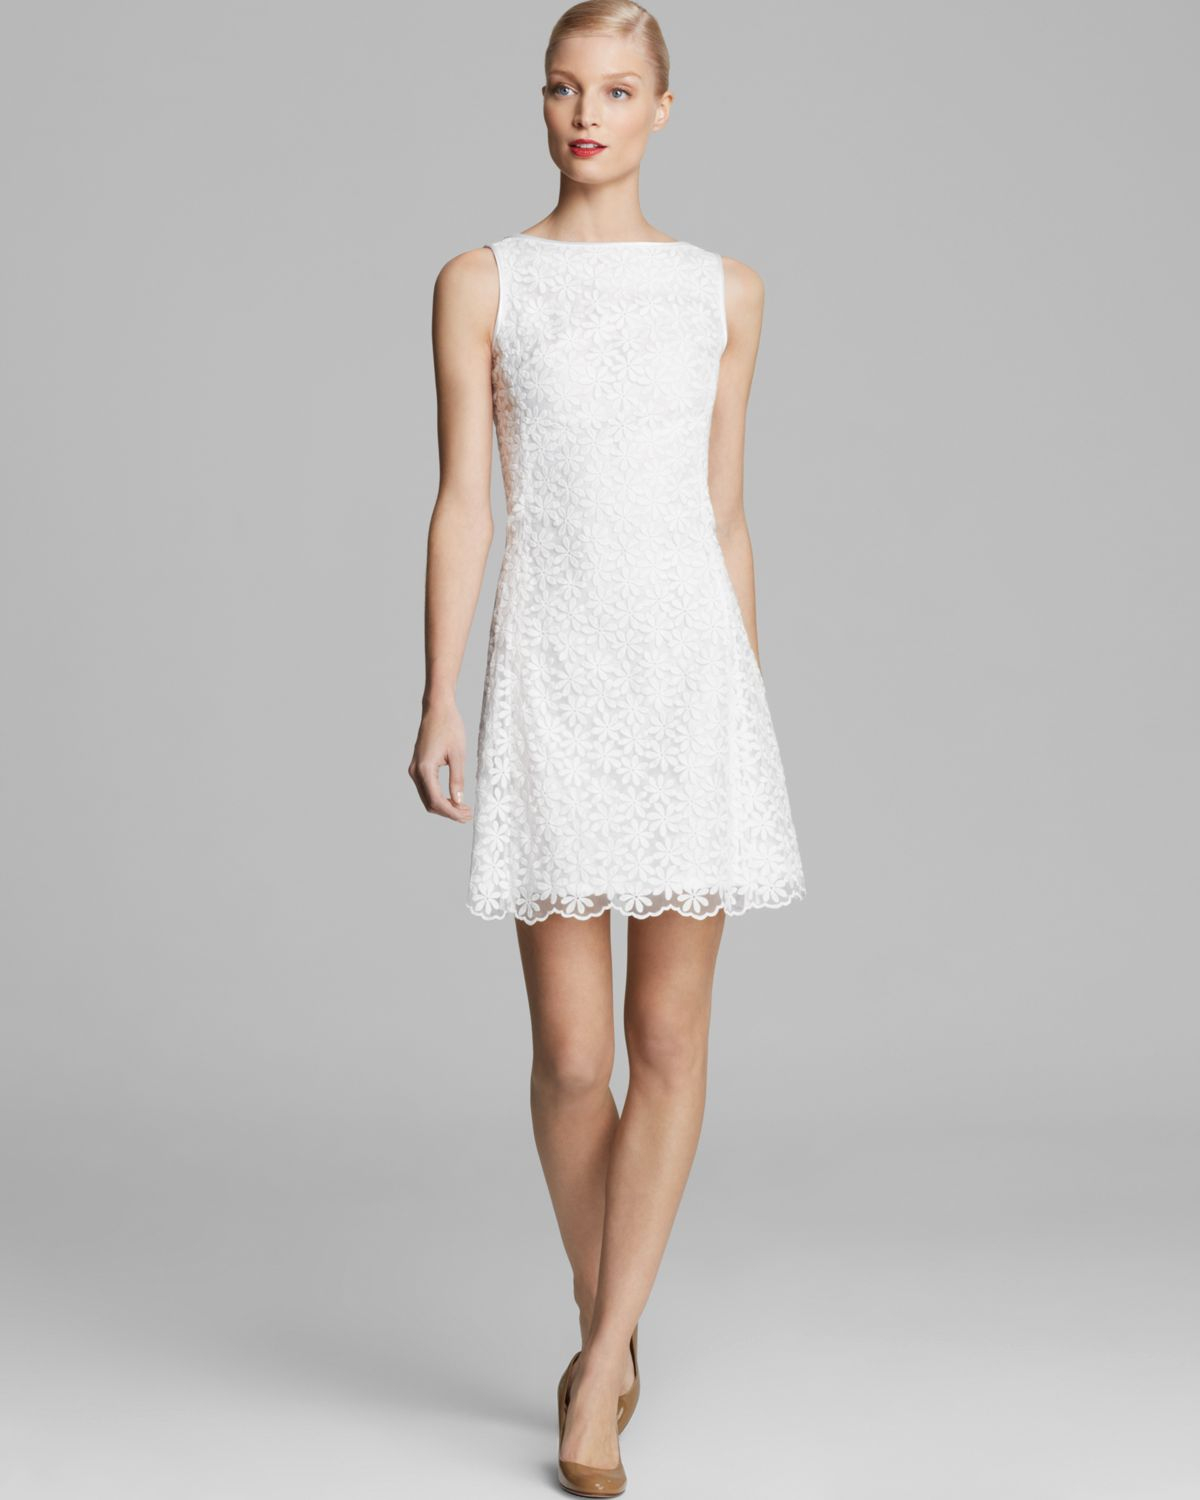 Lyst - Kate Spade New York Izzy Dress in White